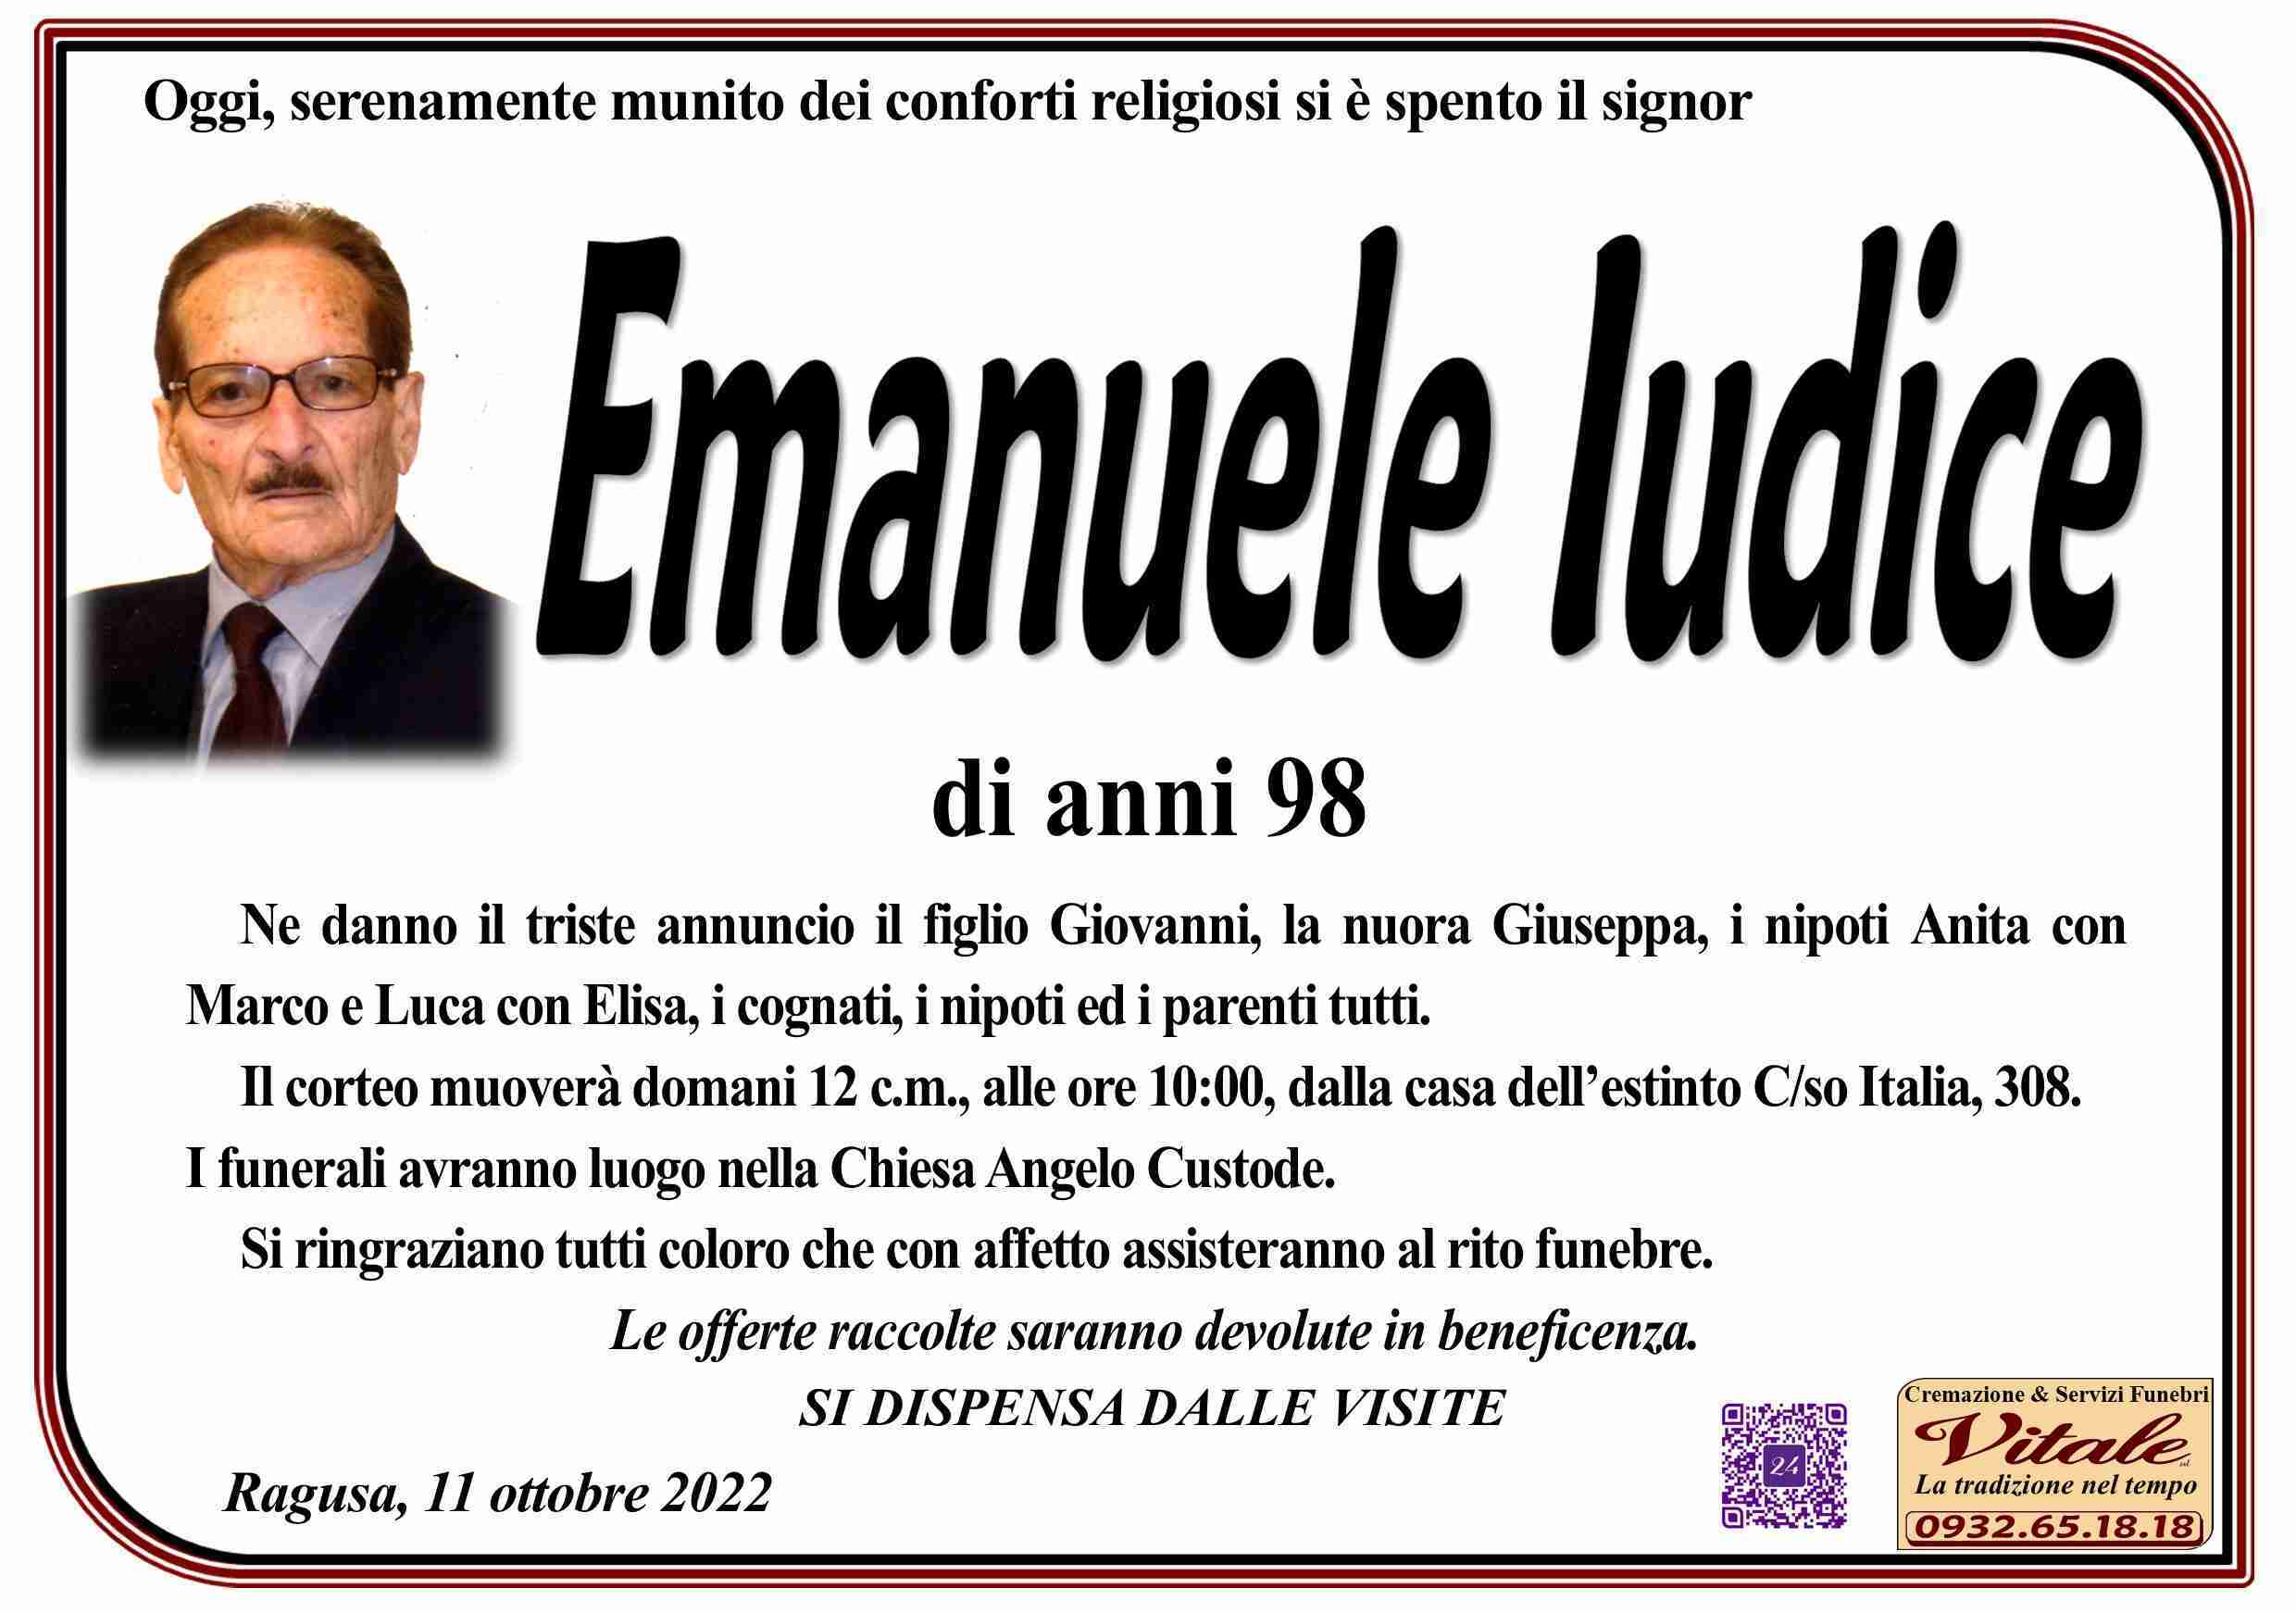 Emanuele Iudice